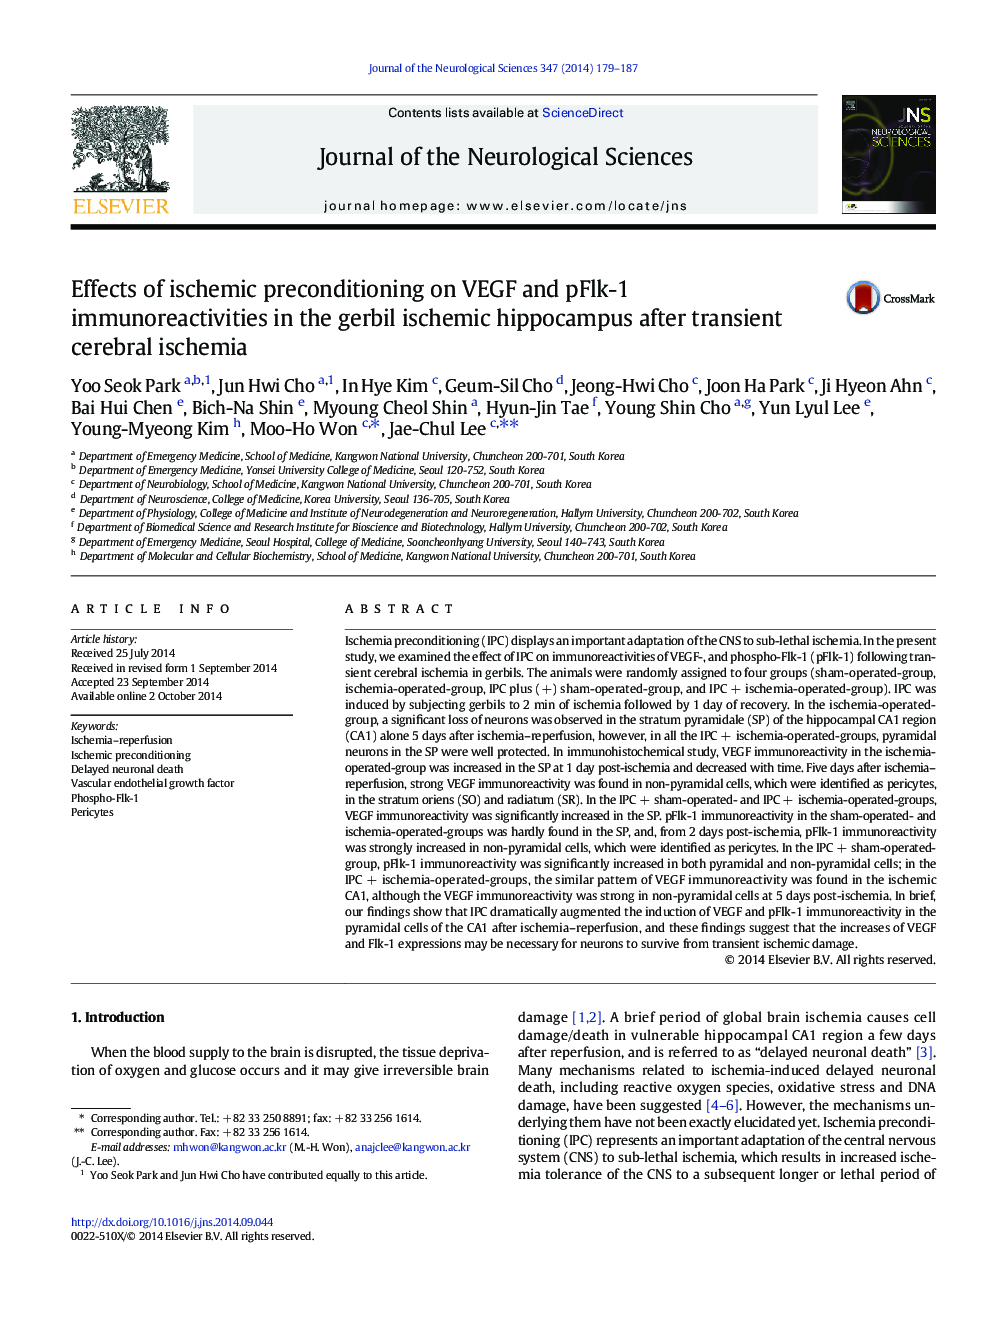 Effects of ischemic preconditioning on VEGF and pFlk-1 immunoreactivities in the gerbil ischemic hippocampus after transient cerebral ischemia